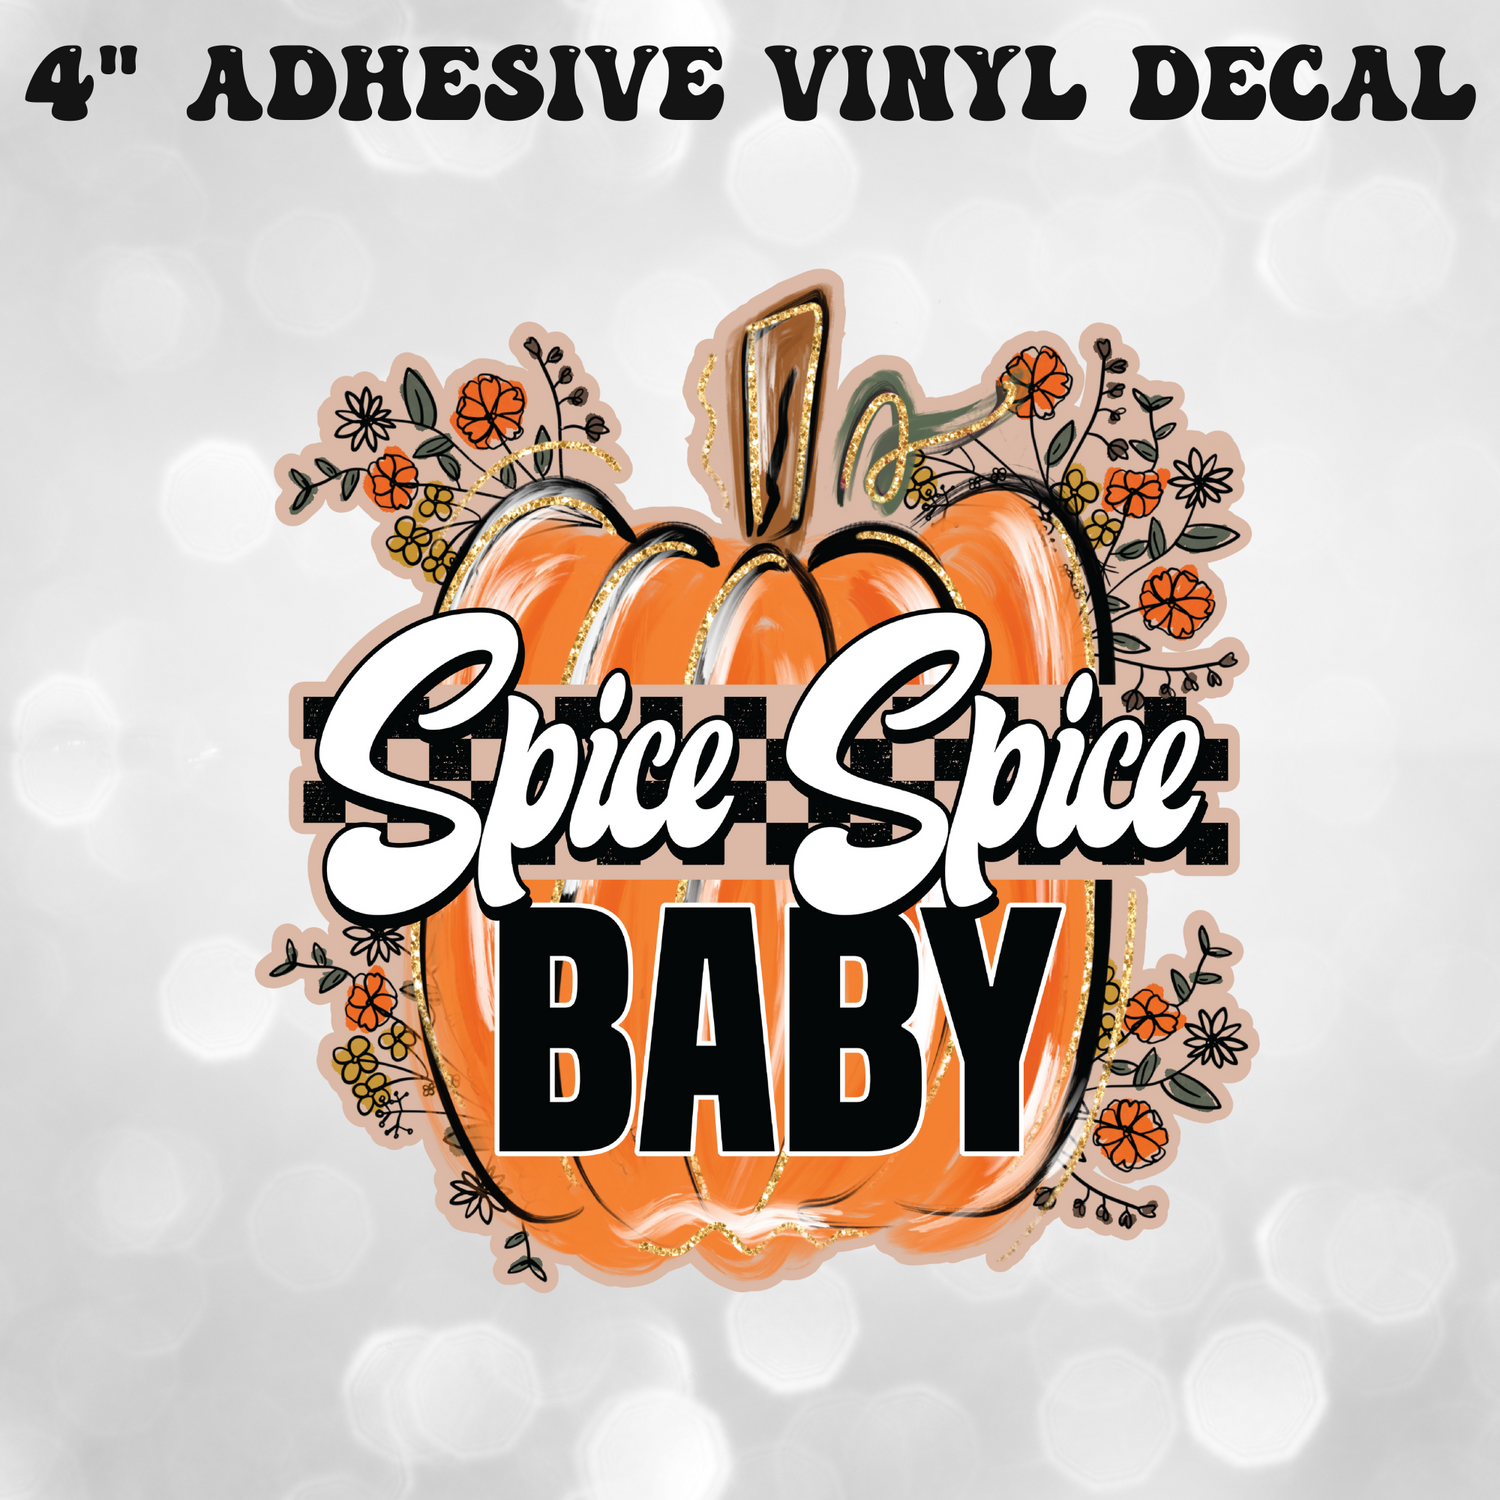 4" Vinyl Adhesive Decals